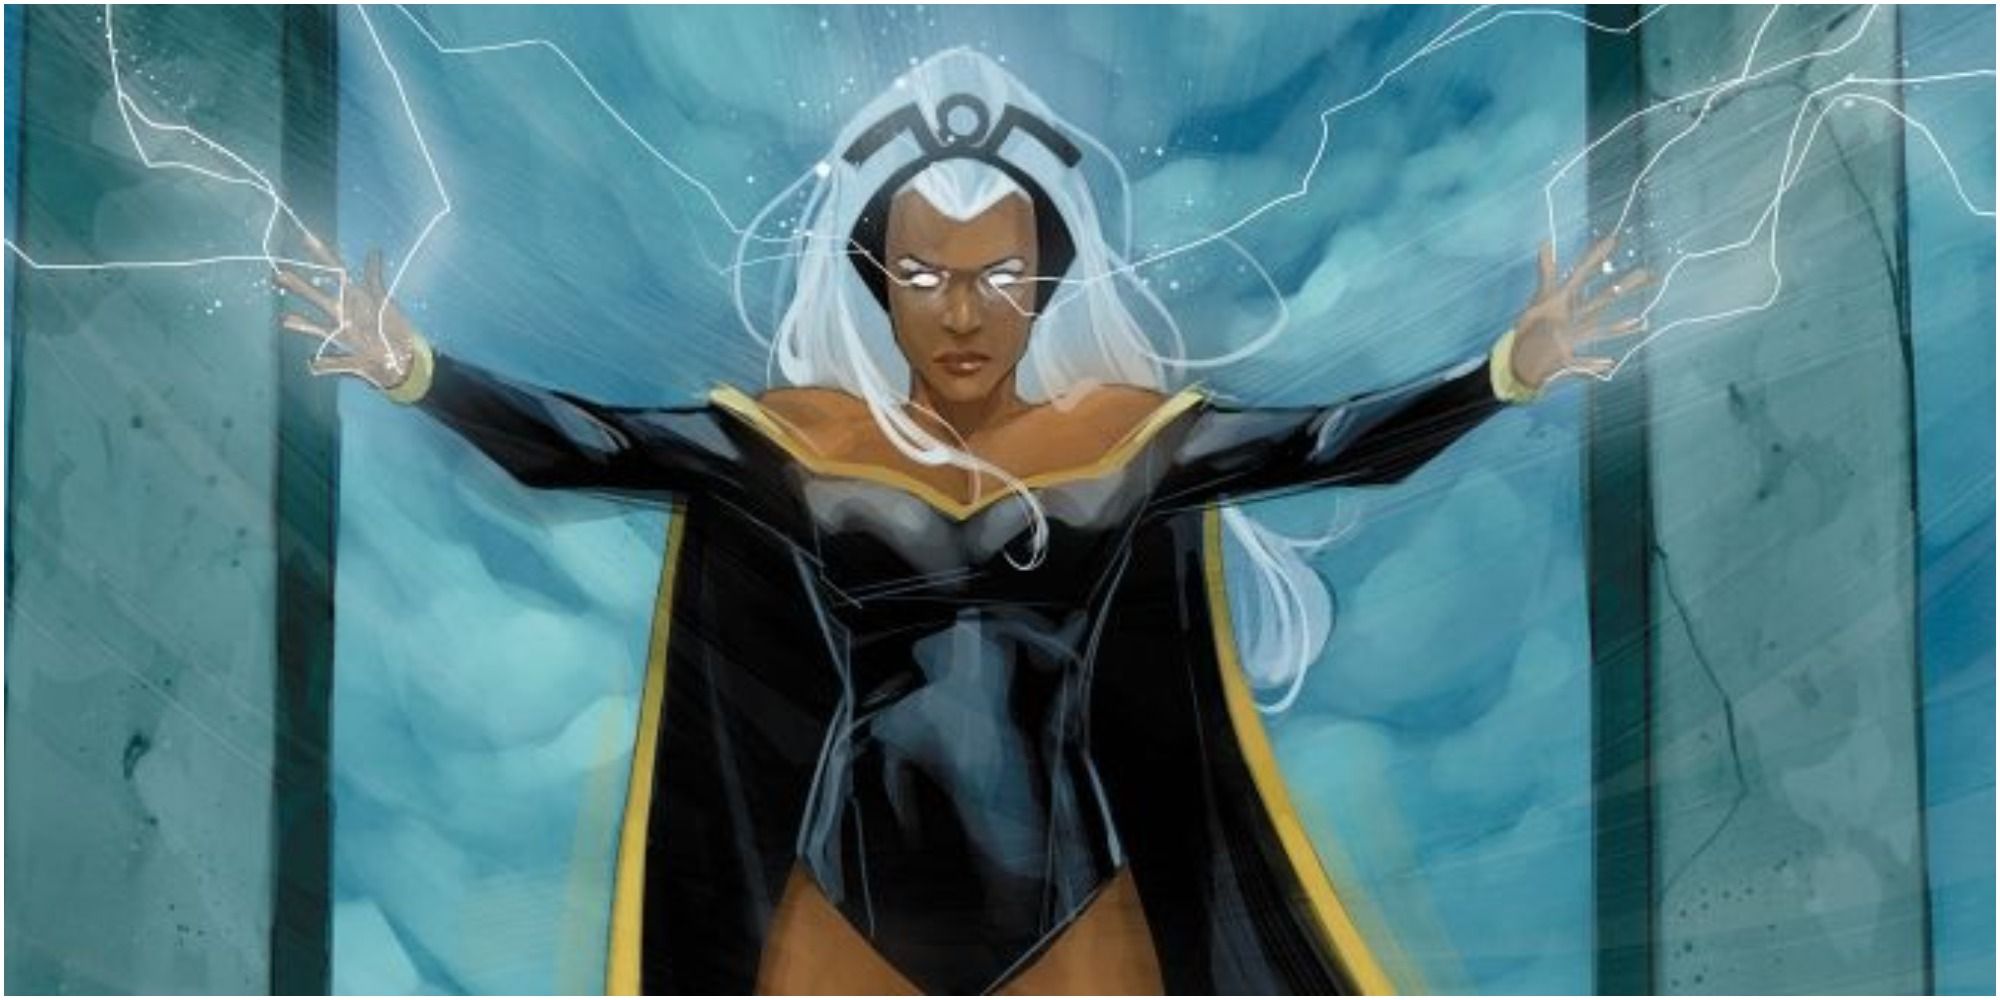 Storm commands lightning with both hands in X-Men.